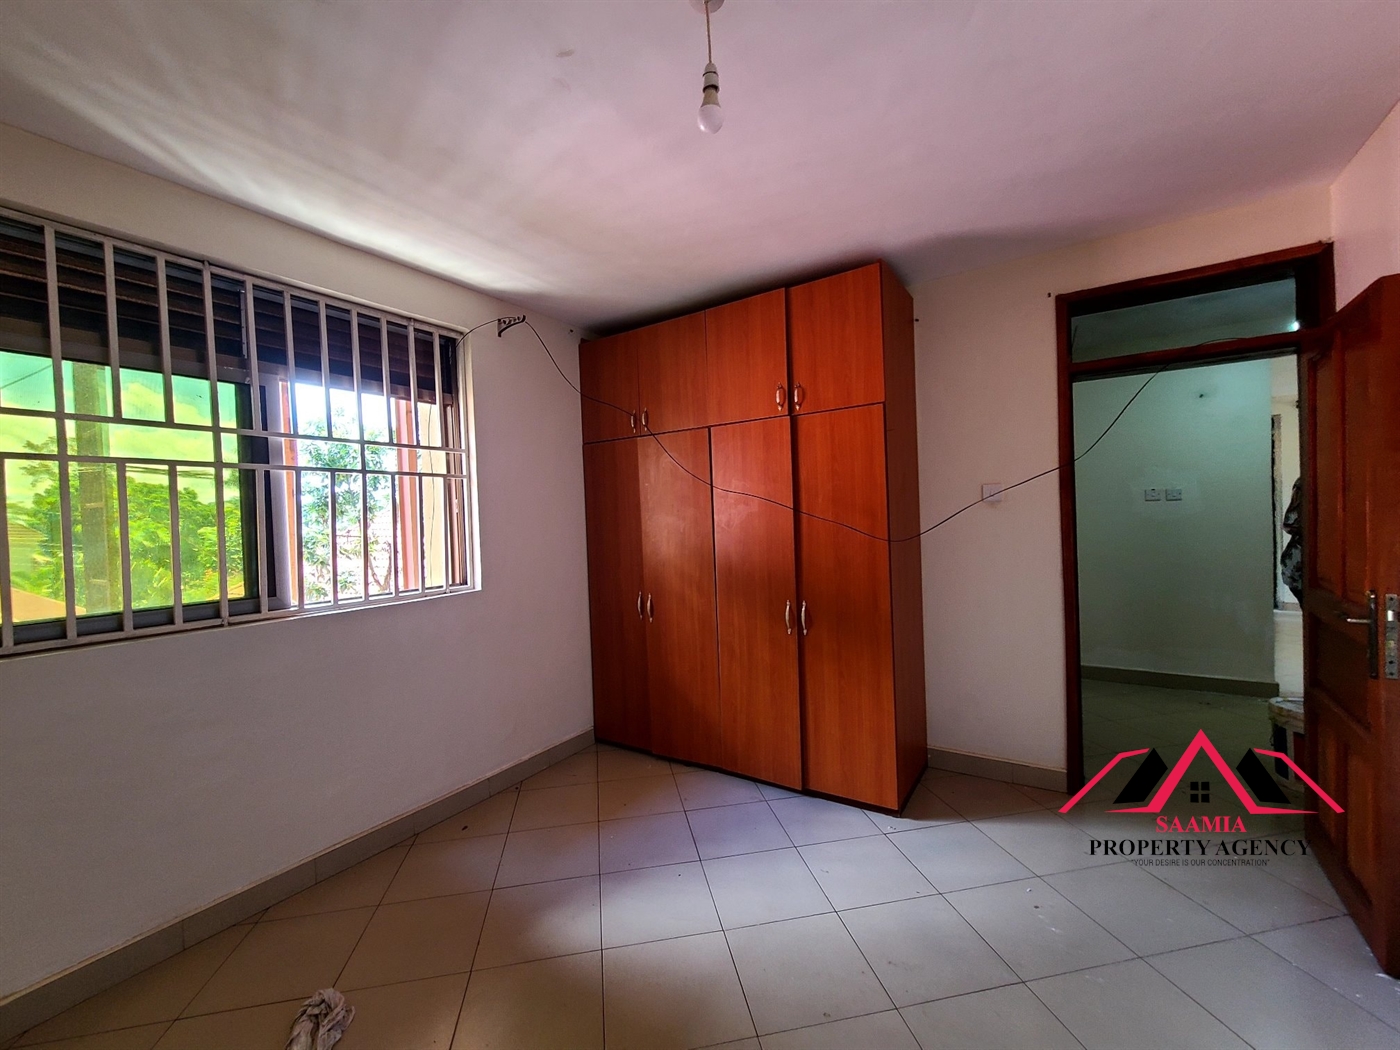 Apartment for rent in Kubuuma Kampala